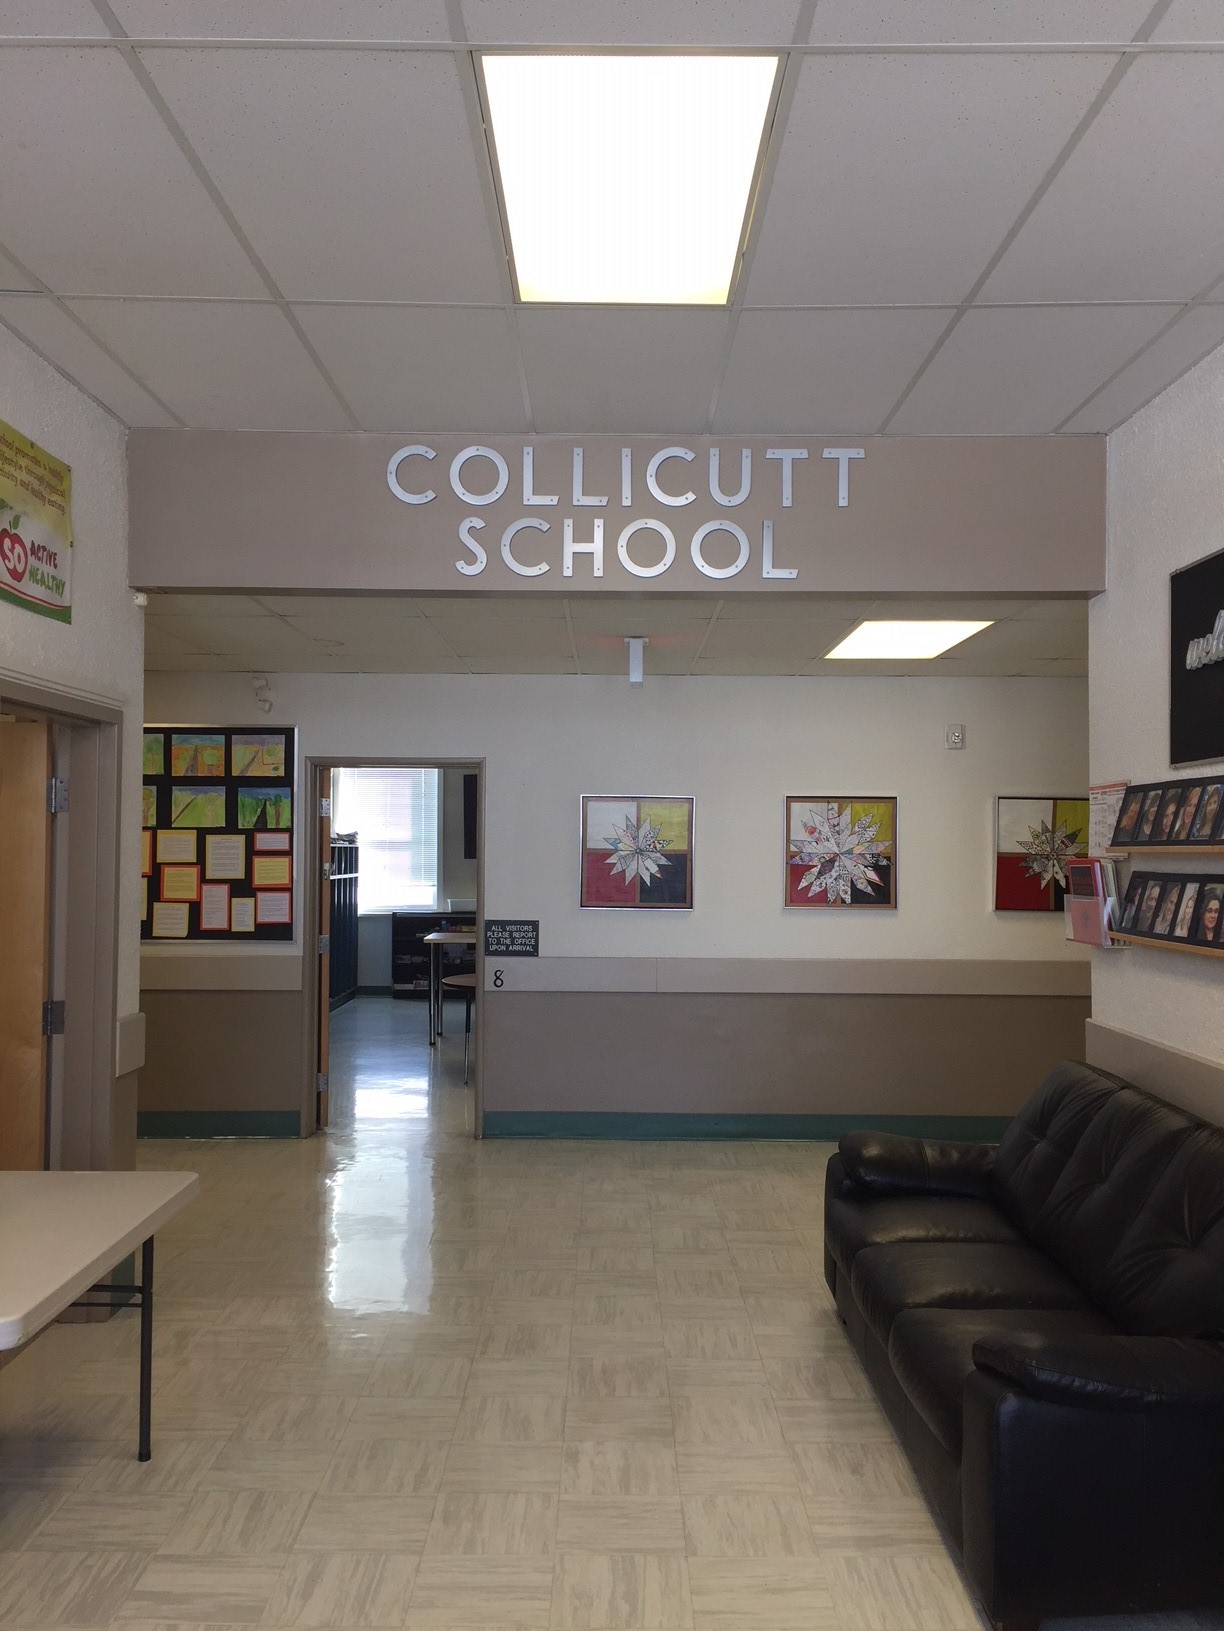 Collicutt School